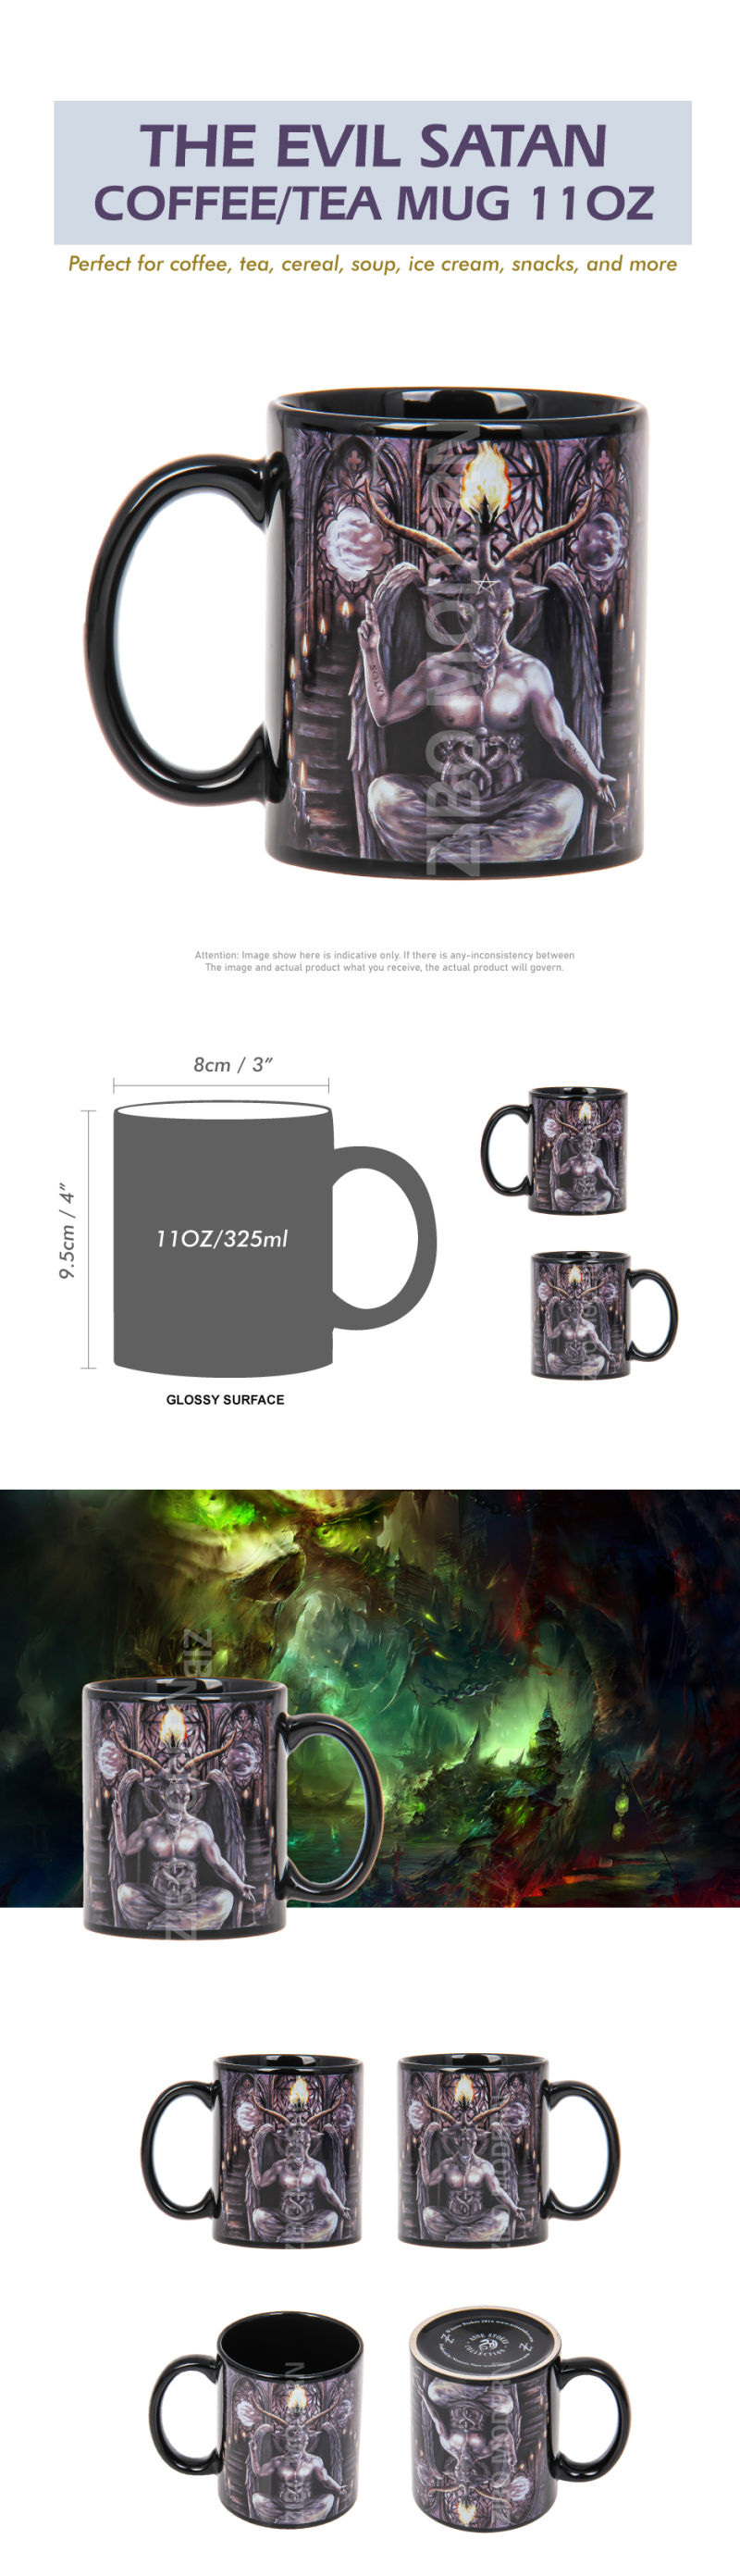 11 Oz The Evil Satan Ceramic Coffee / Tea Mug - Ceramic Mug - Porcelain Mugs